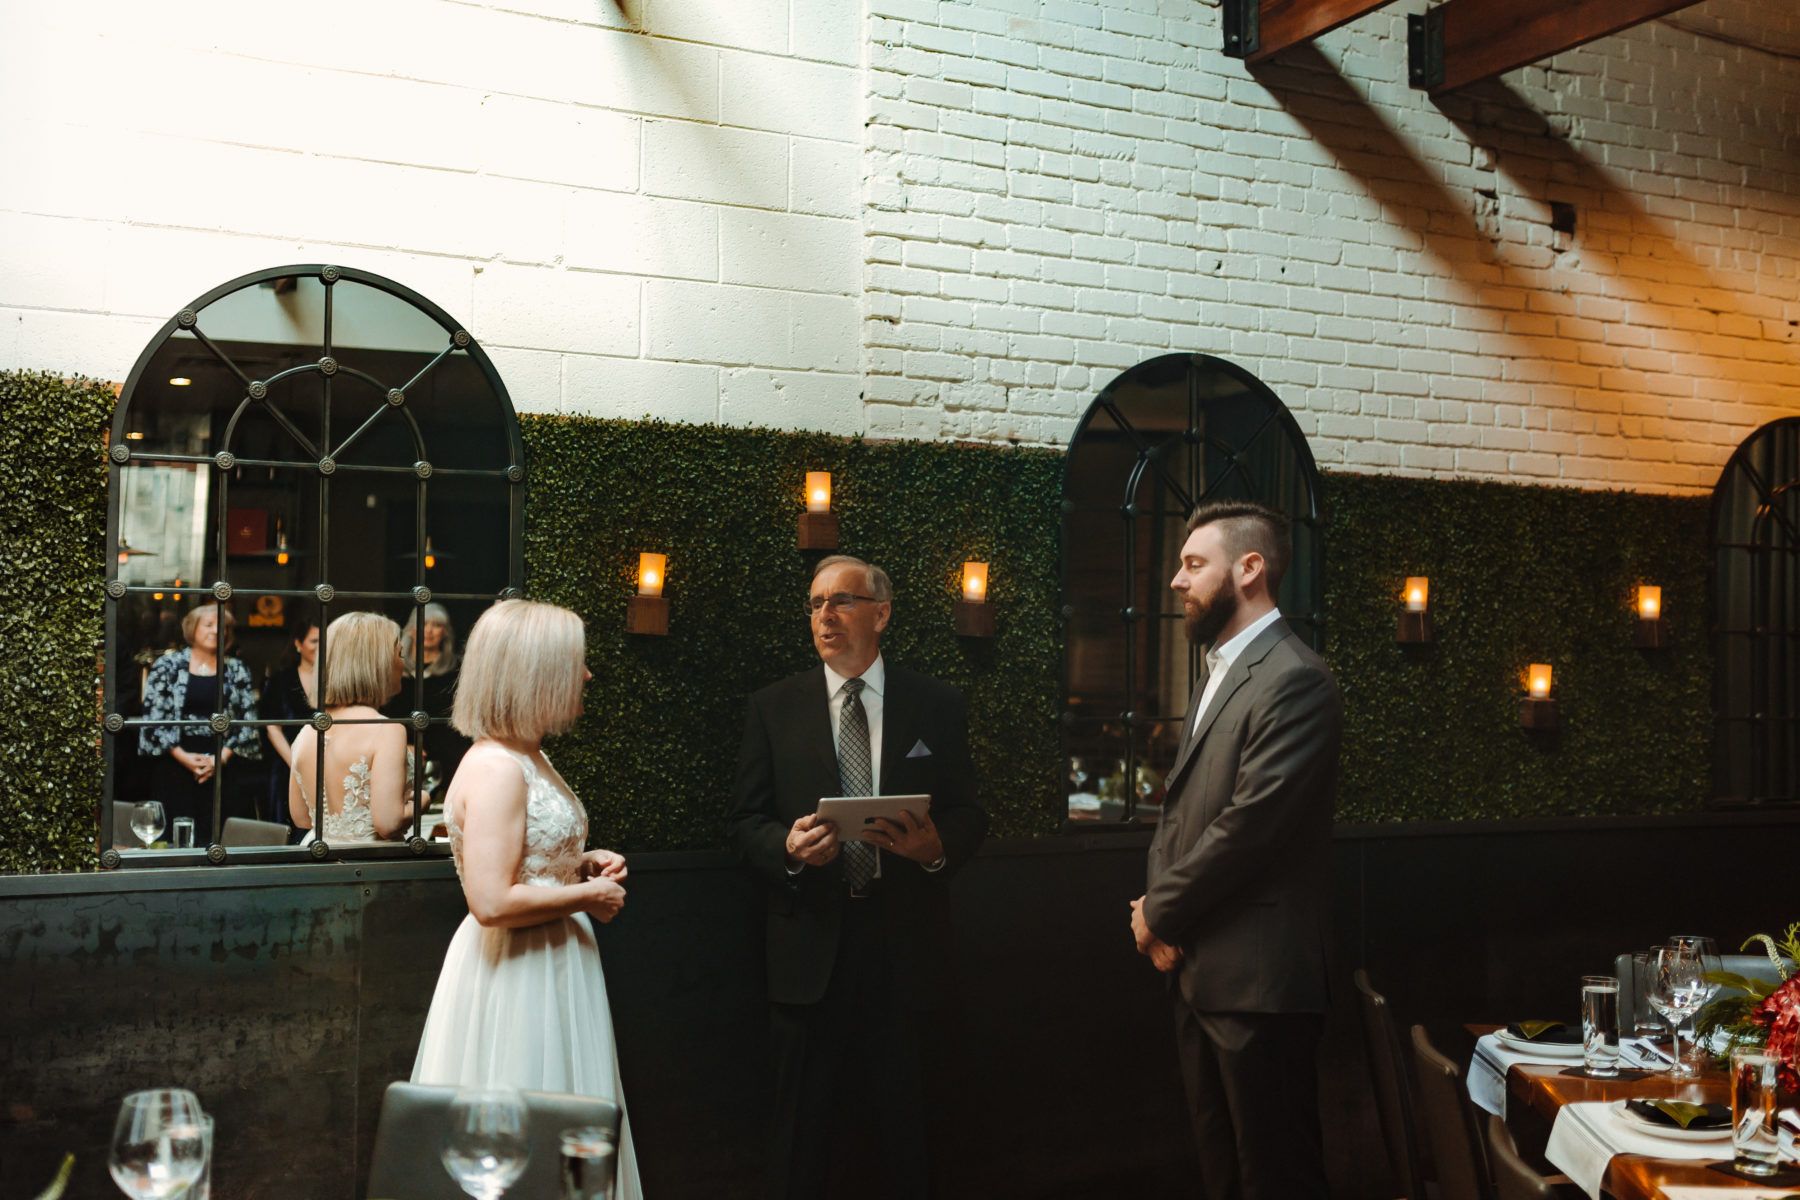 Elopement ceremony: Nashville brunch elopement featured on Nashville Bride Guide